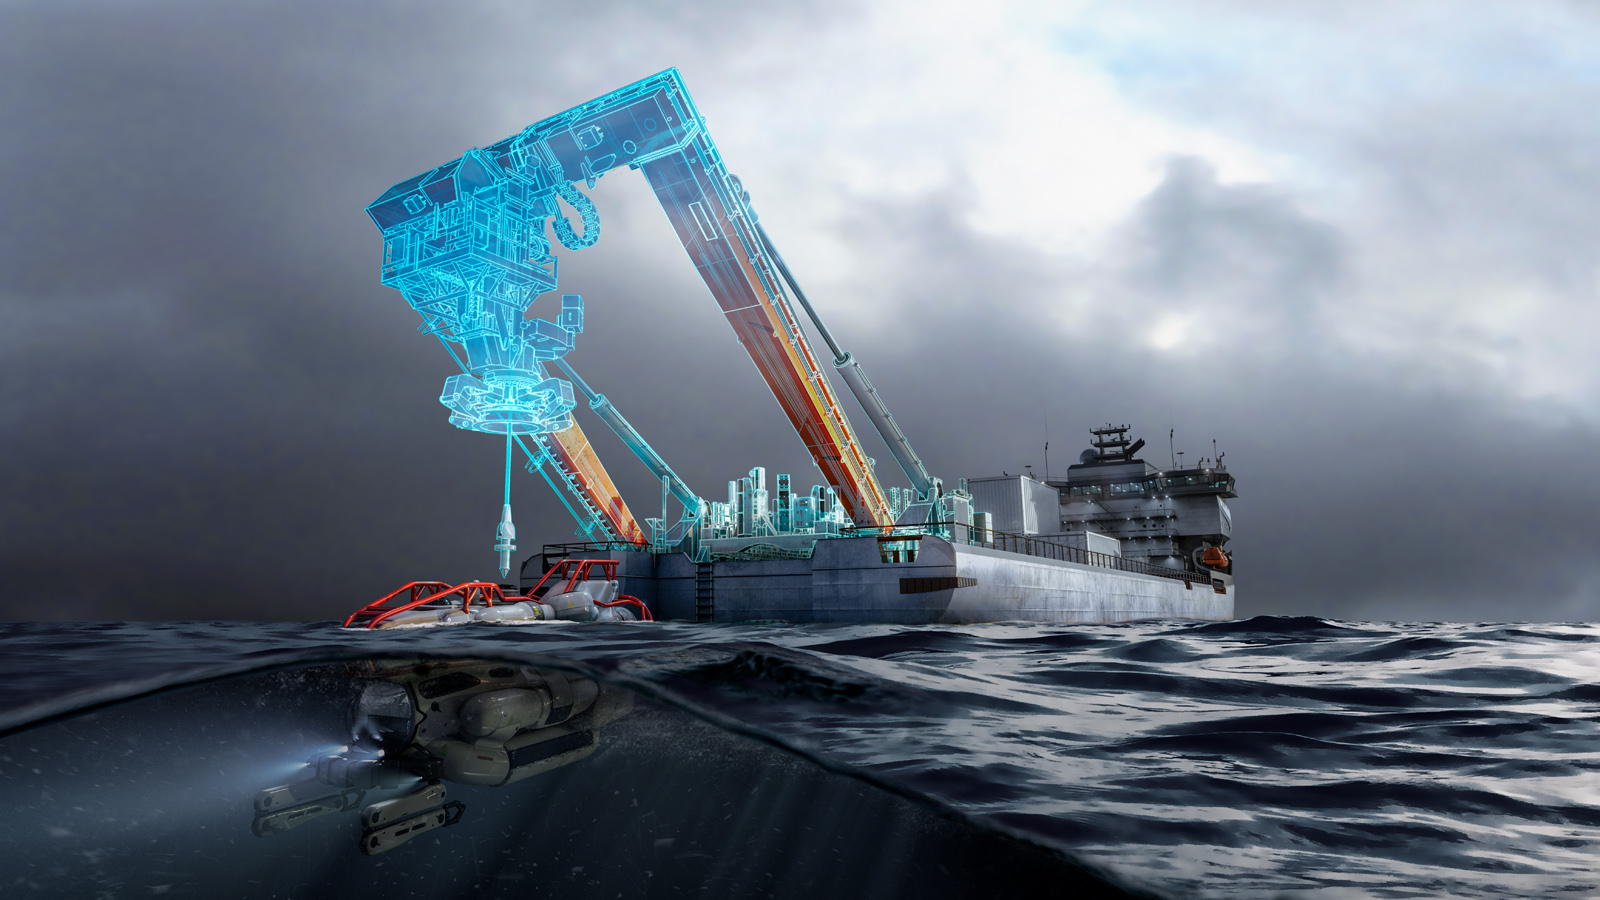 artist impression of vessel with submarine rescue system in dark sea